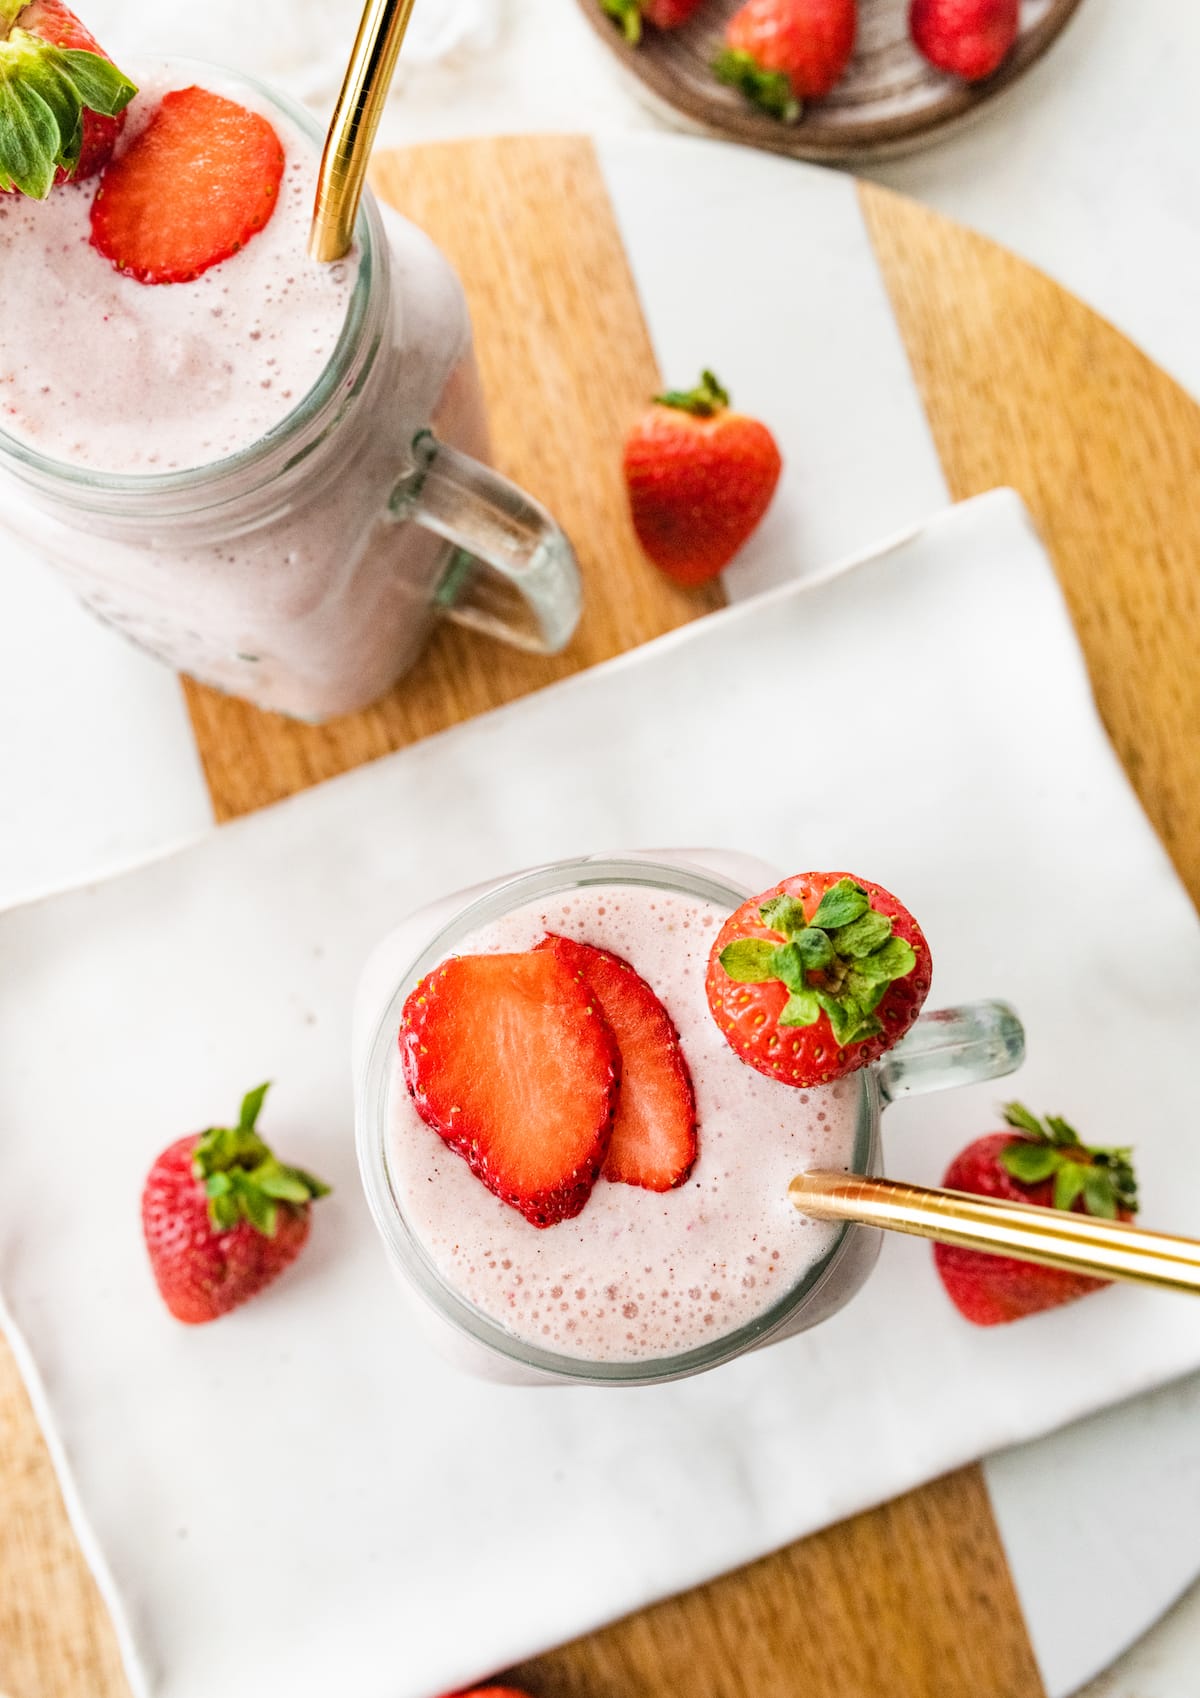 A strawberry protein shake.